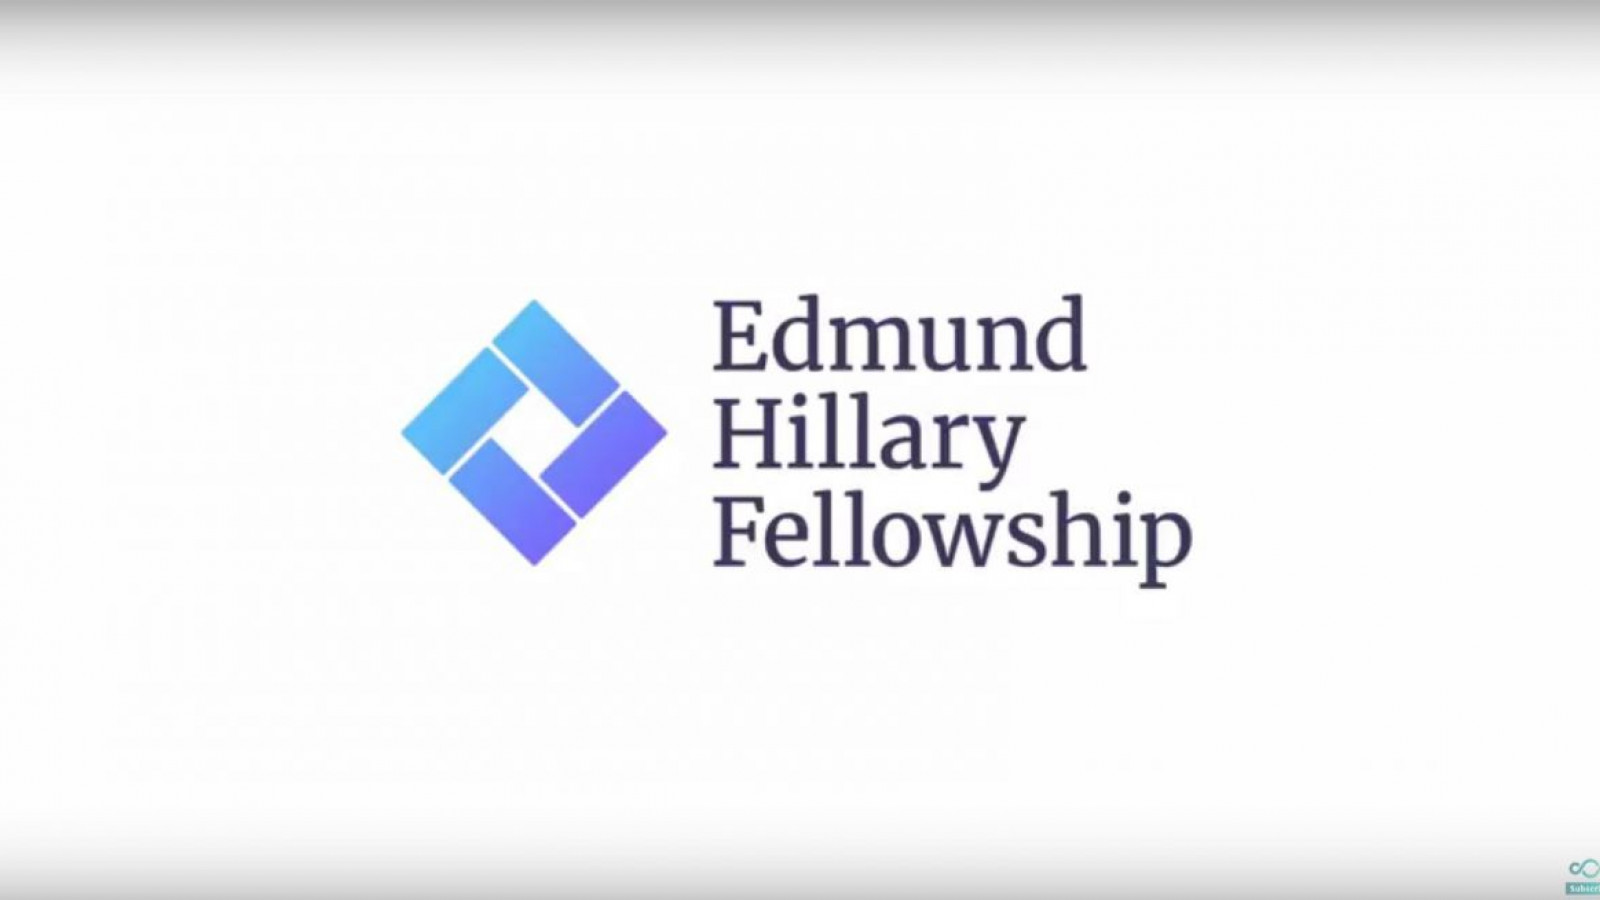 Edmund Hillary Fellowship logo